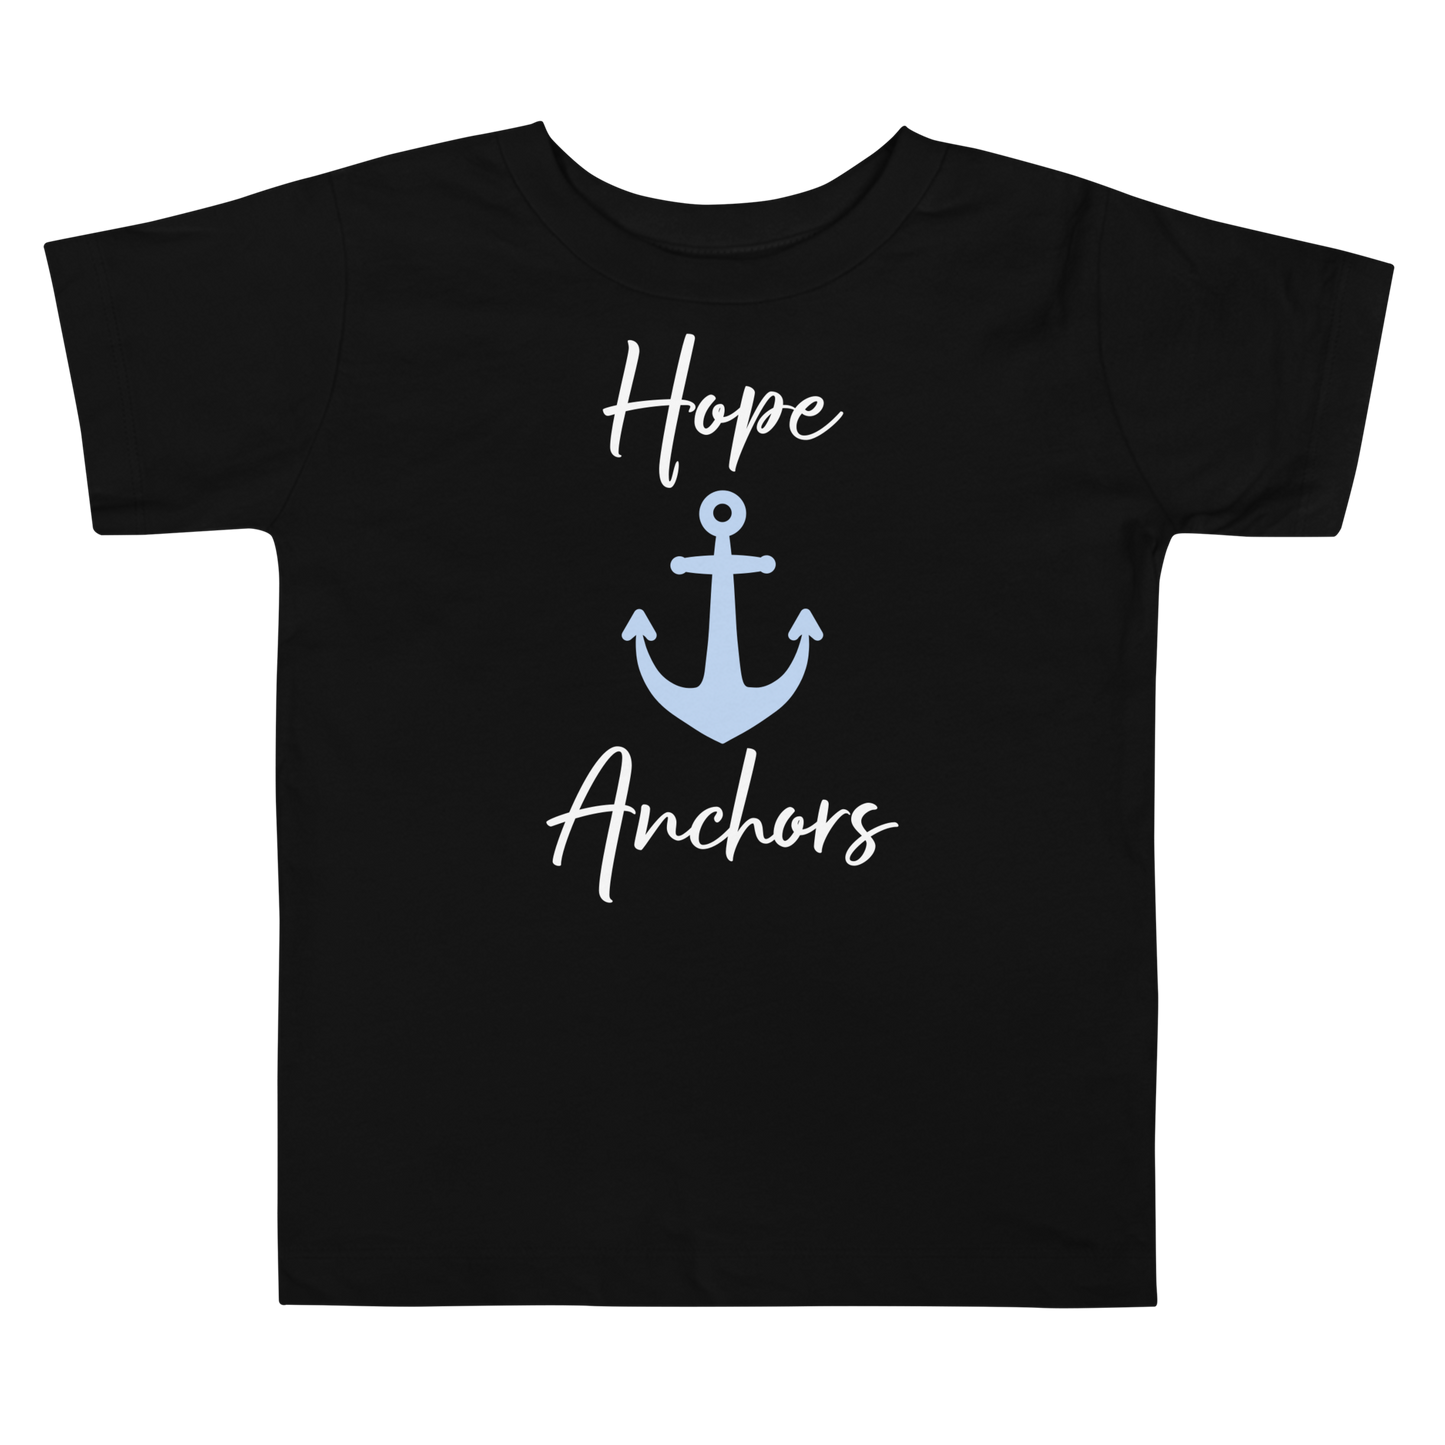 Hope Anchors - Toddler Short Sleeve Tee